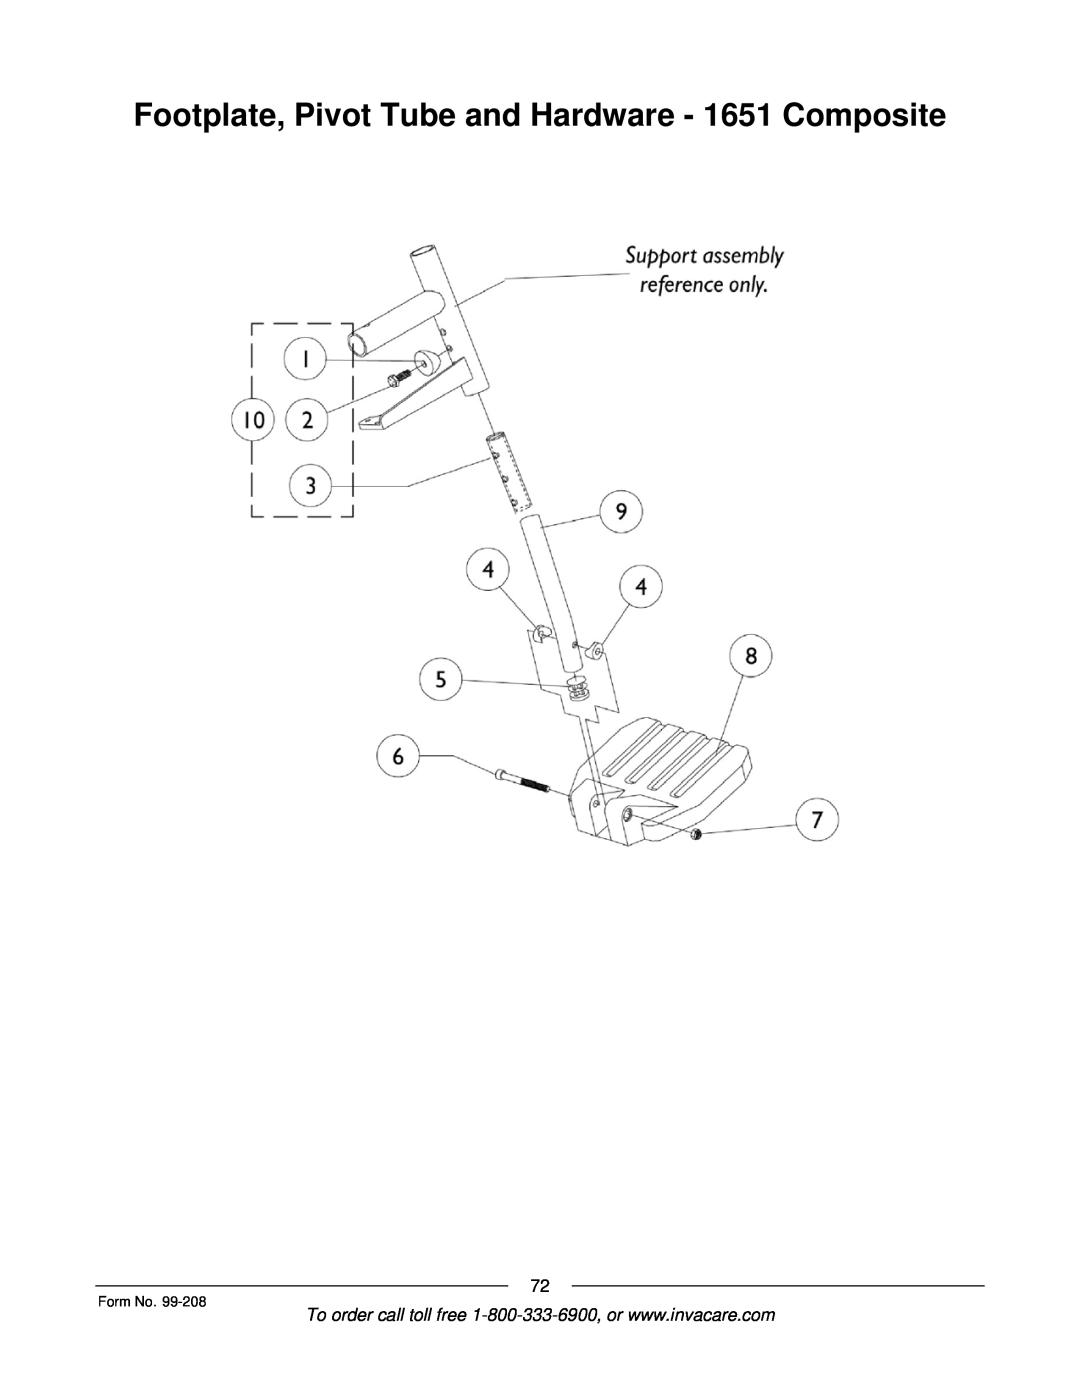 Invacare Allegro manual Footplate, Pivot Tube and Hardware - 1651 Composite, Form No 